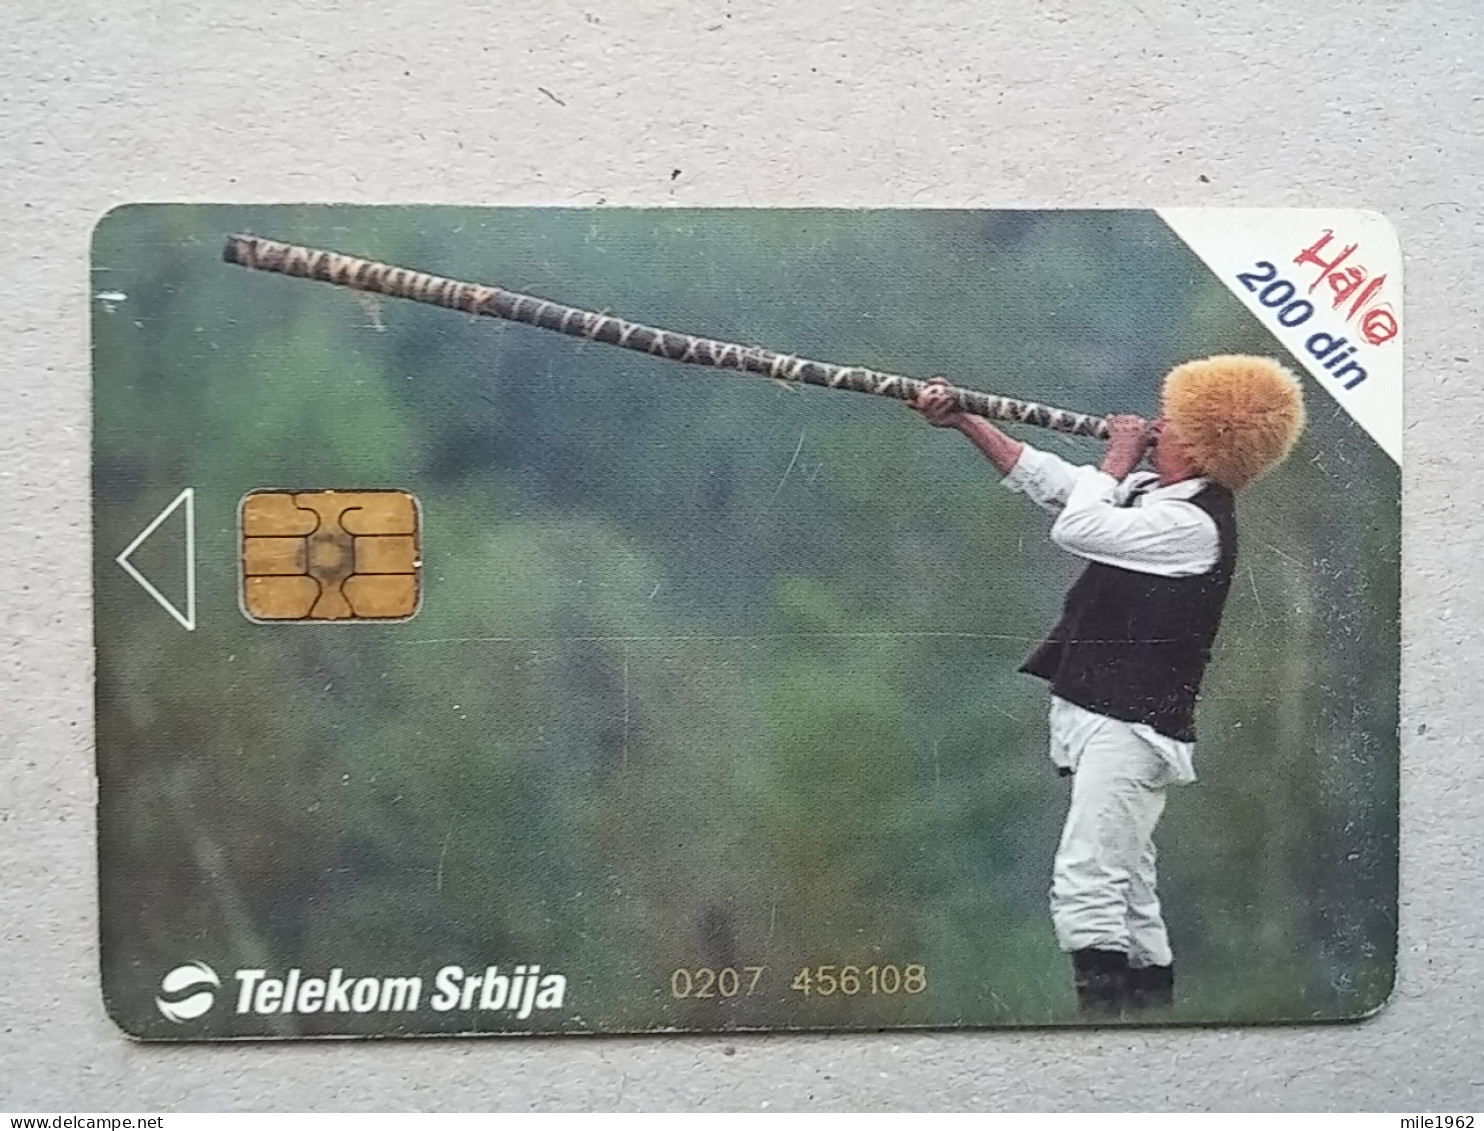 T-574 - SERBIA, Telecard, Télécarte, Phonecard, Halo Kartica - Yugoslavia